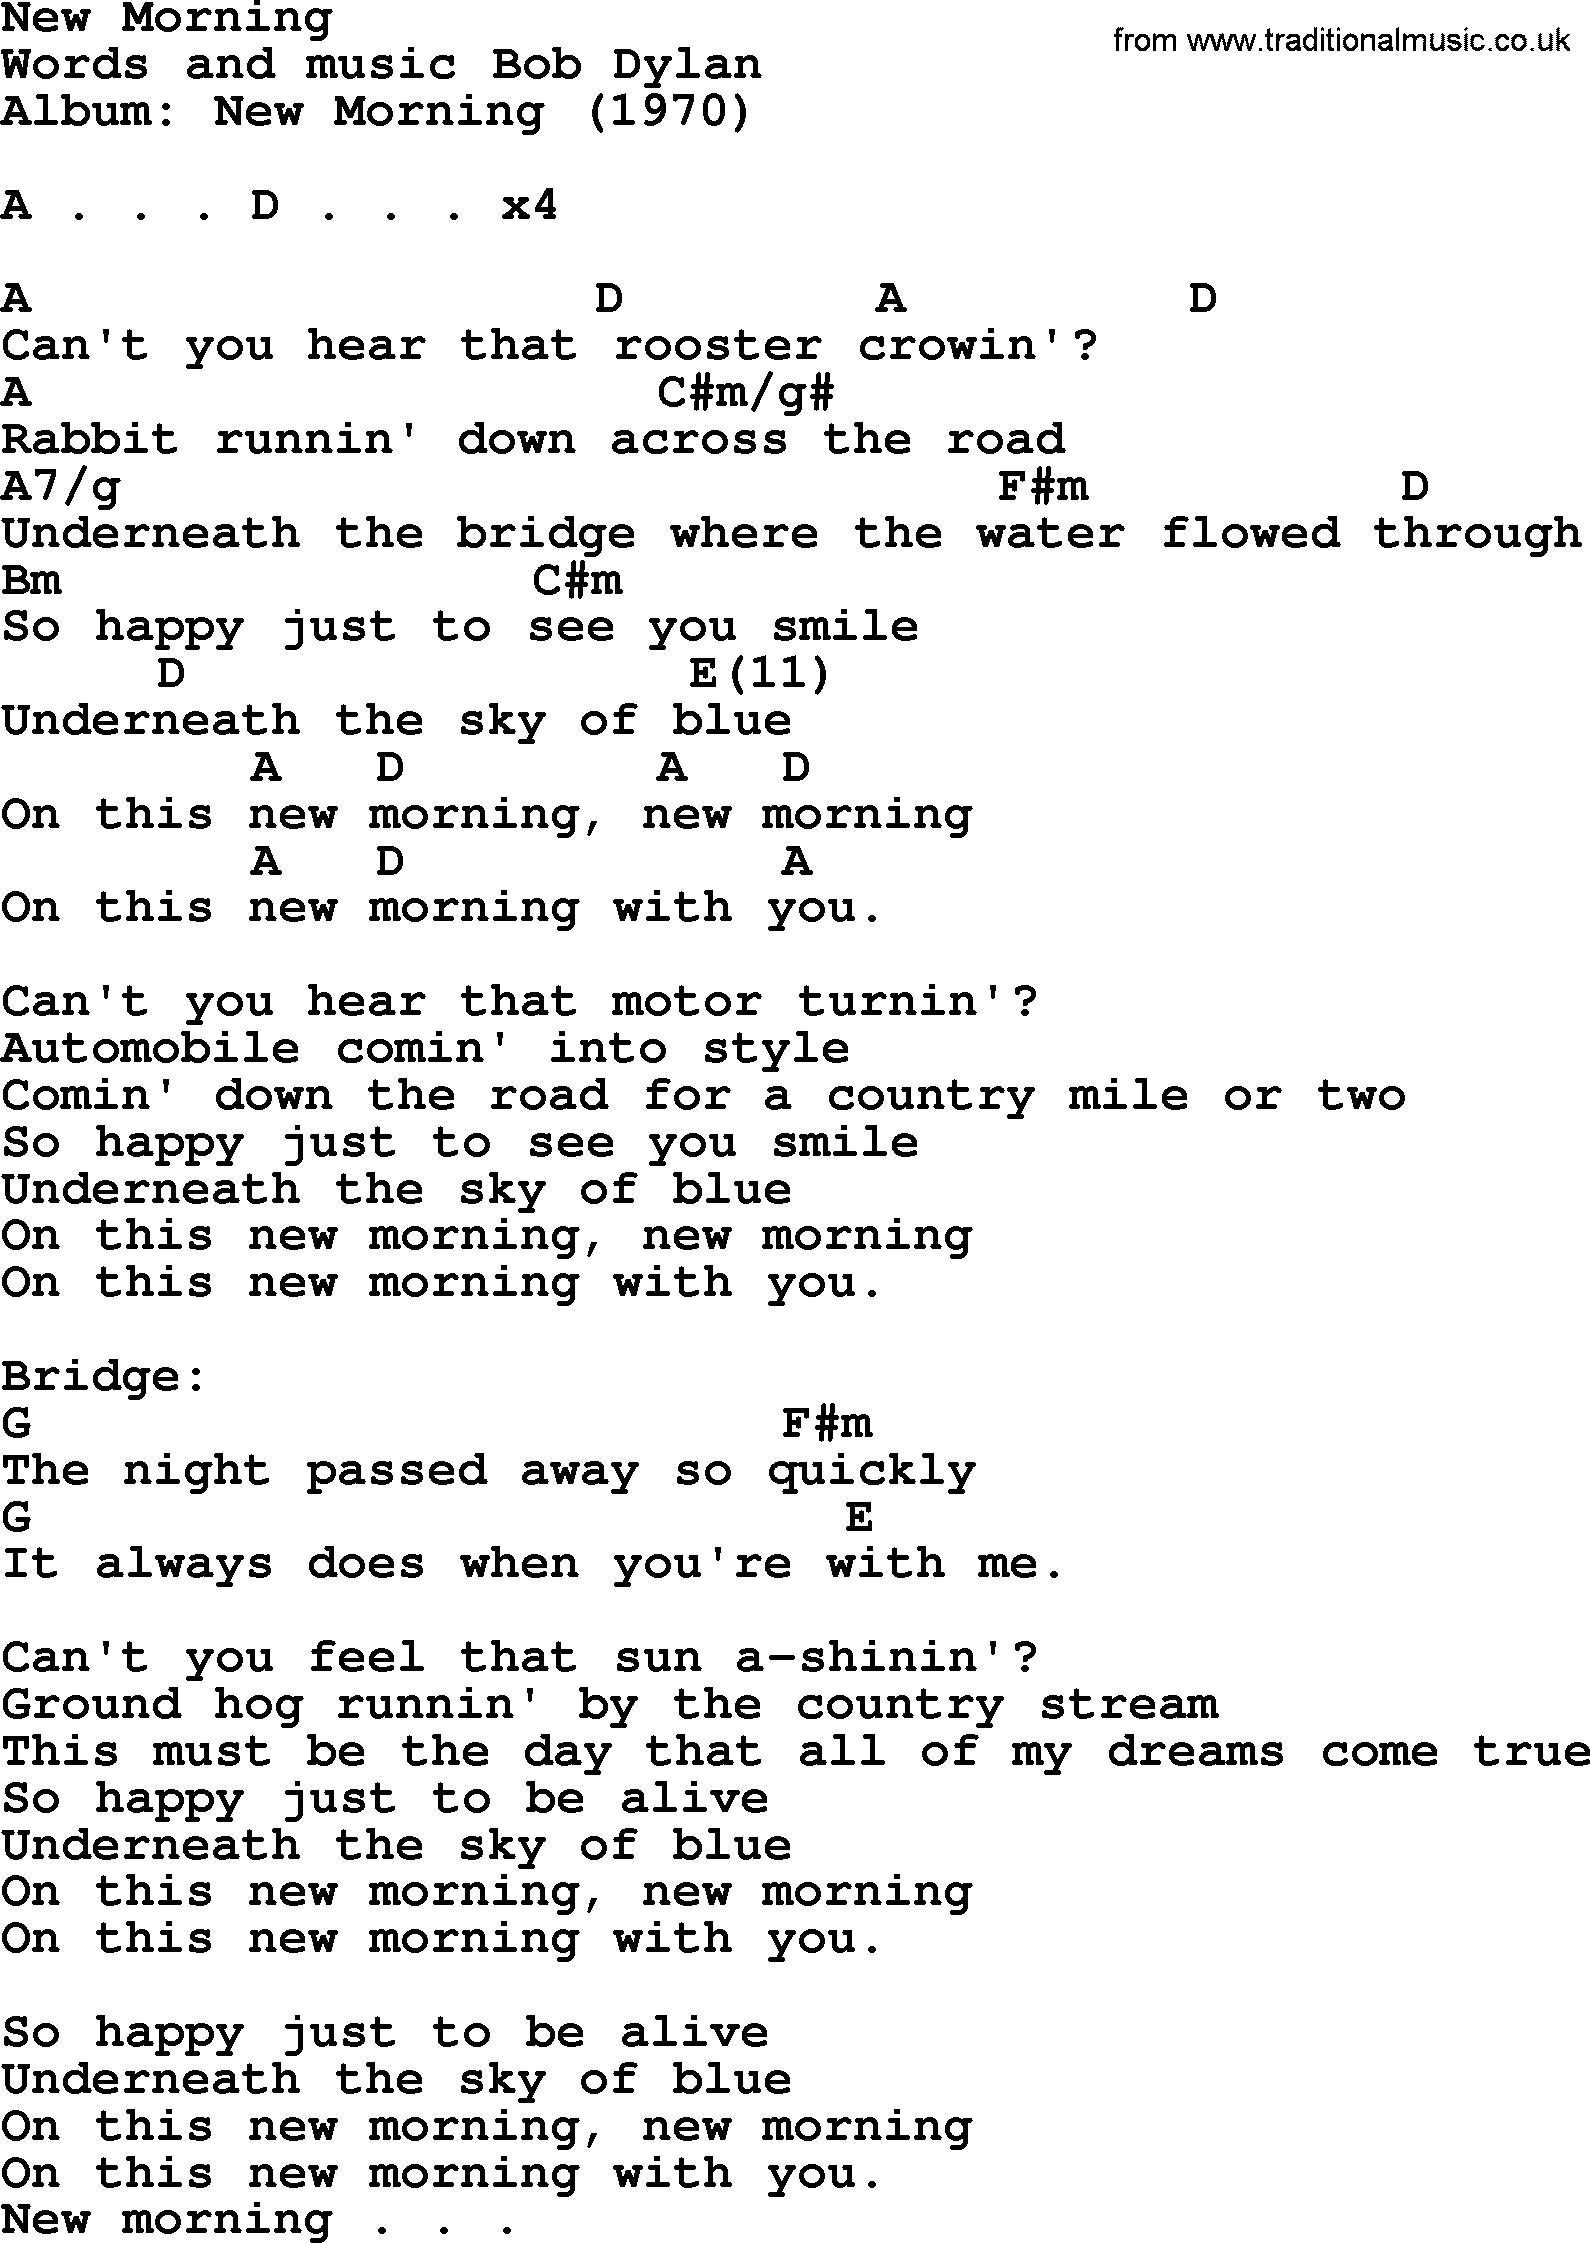 Bob Dylan song, lyrics with chords - New Morning